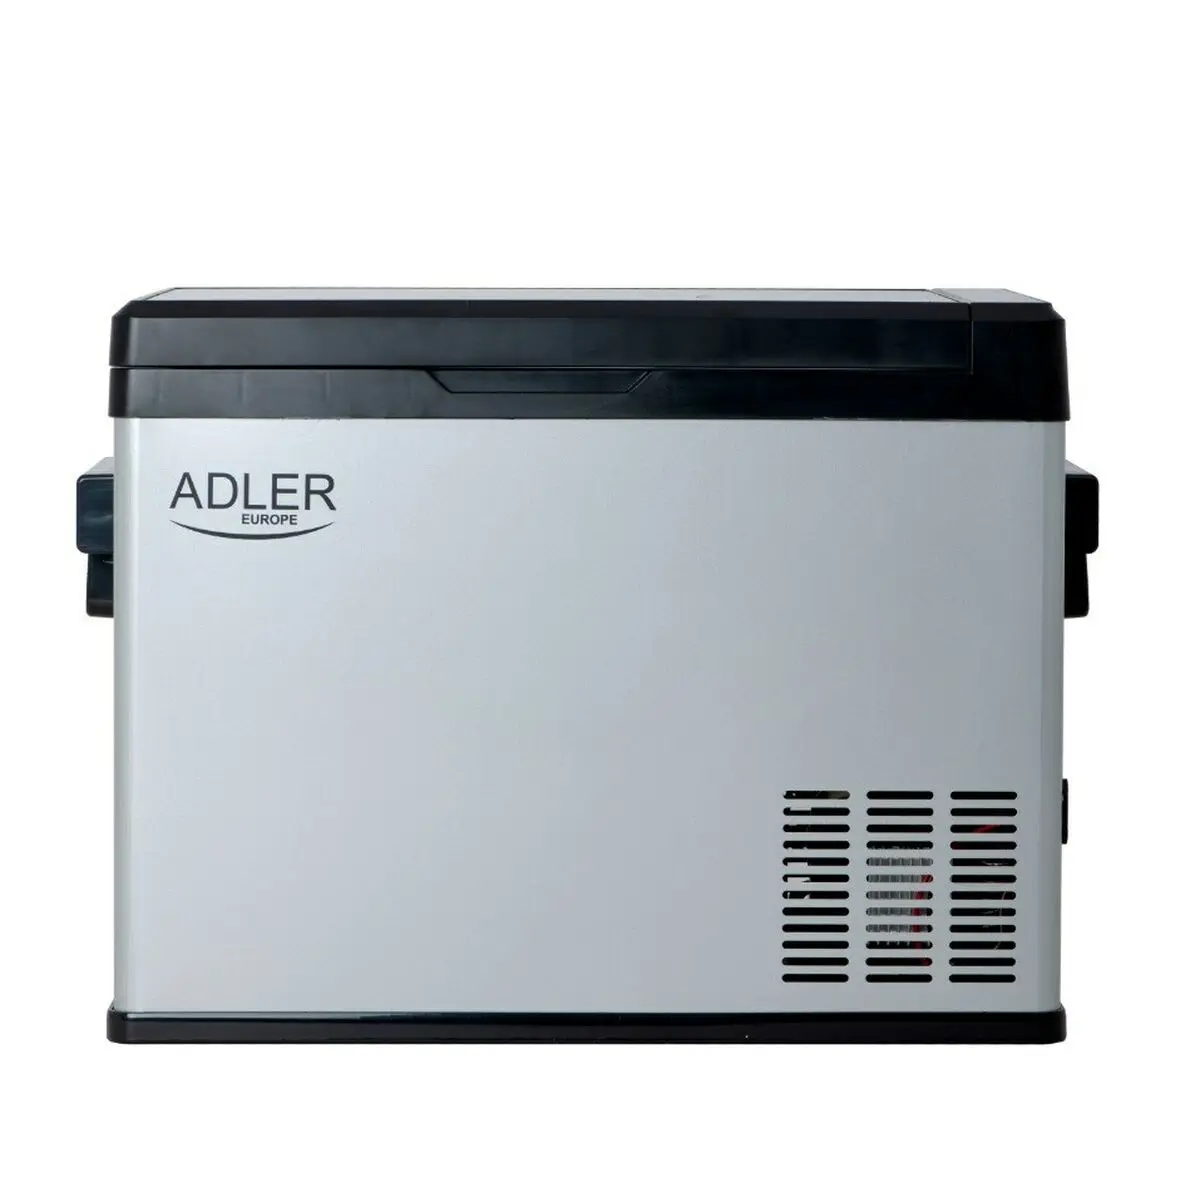 Mini frigo Adler AD 8081